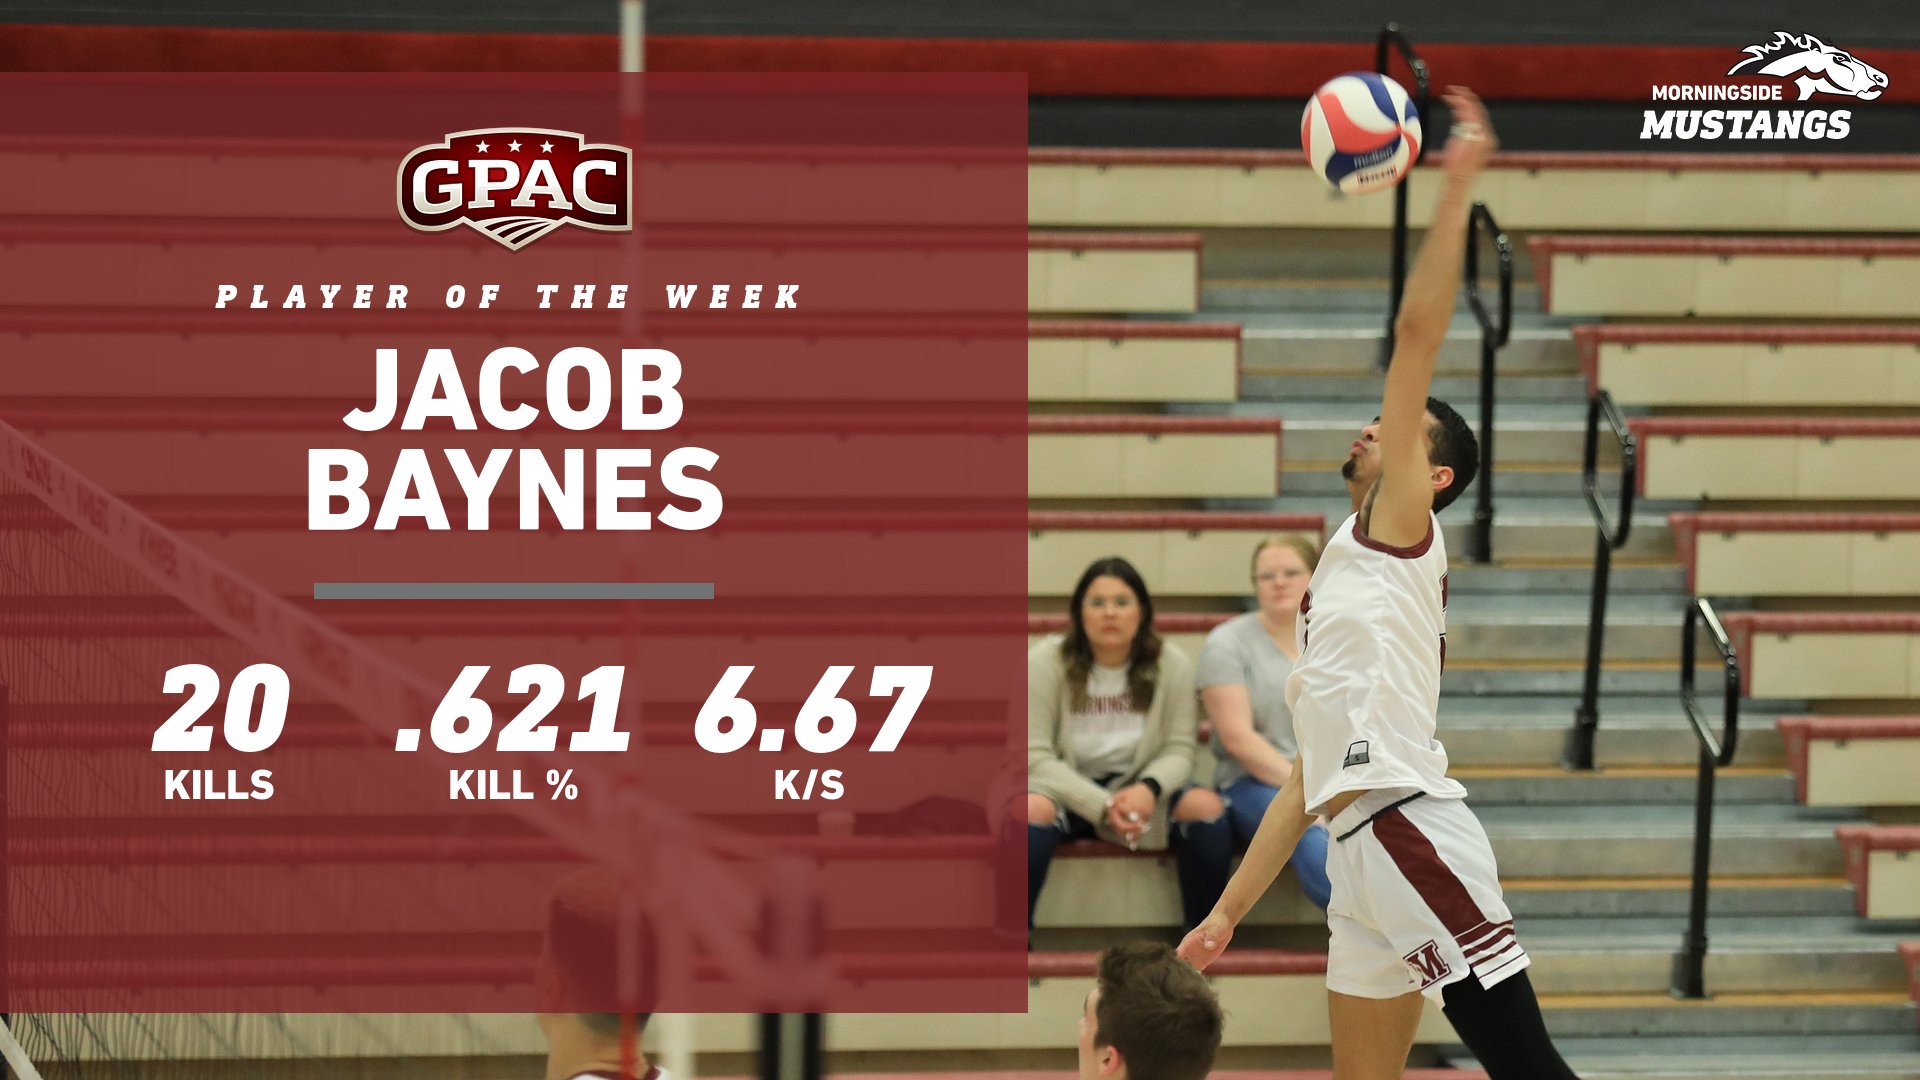 Jacob Baynes, GPAC Player of the week